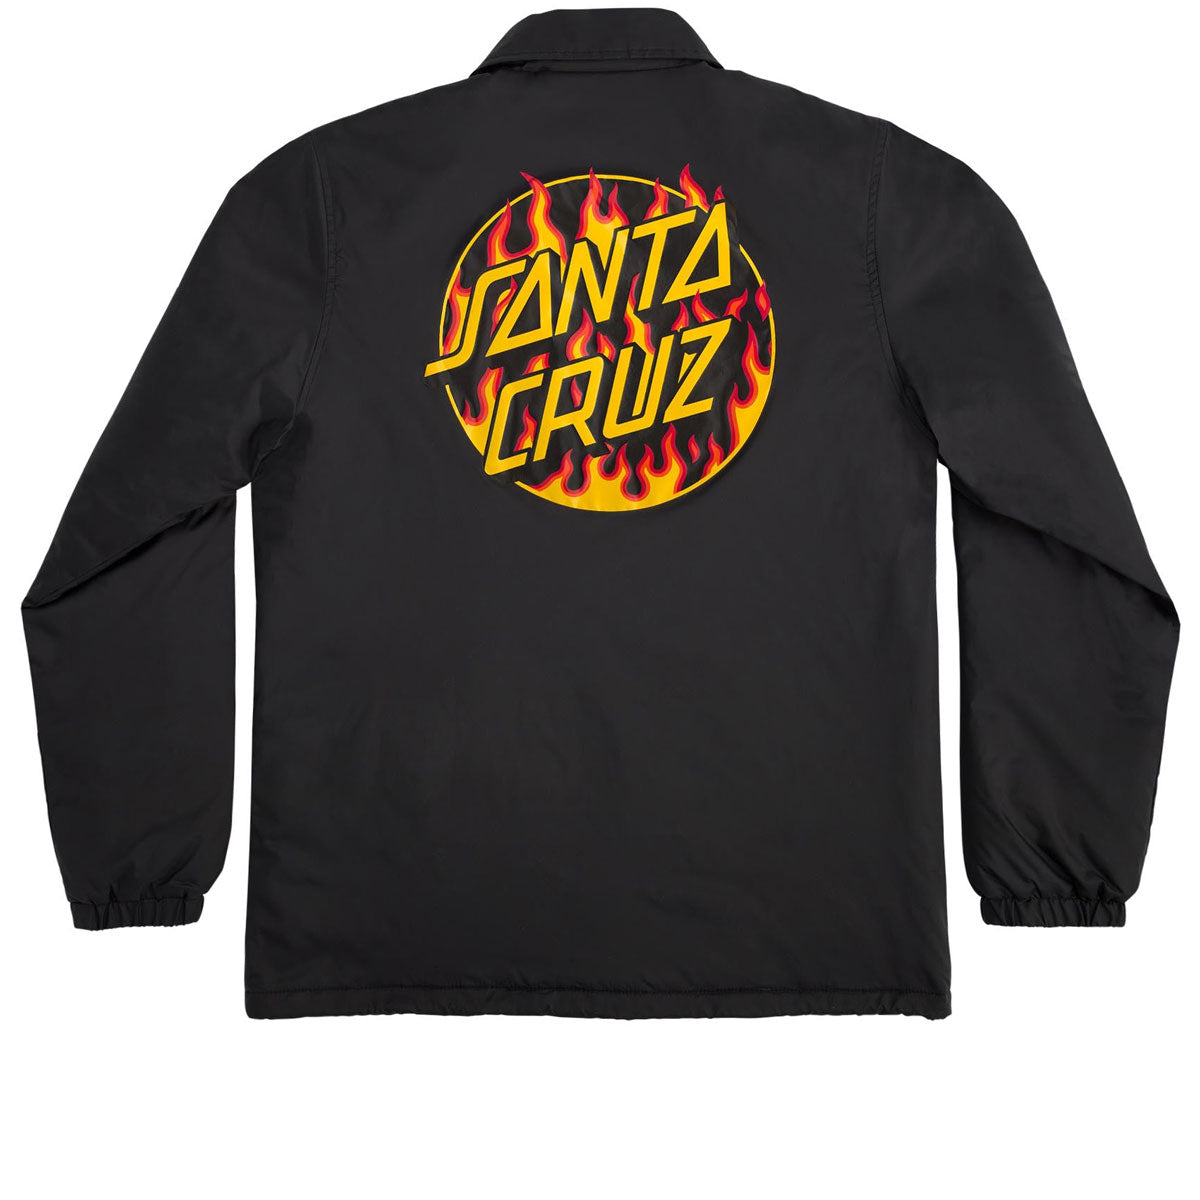 Santa Cruz x Thrasher Flame Dot Coach Jacket - Black image 2